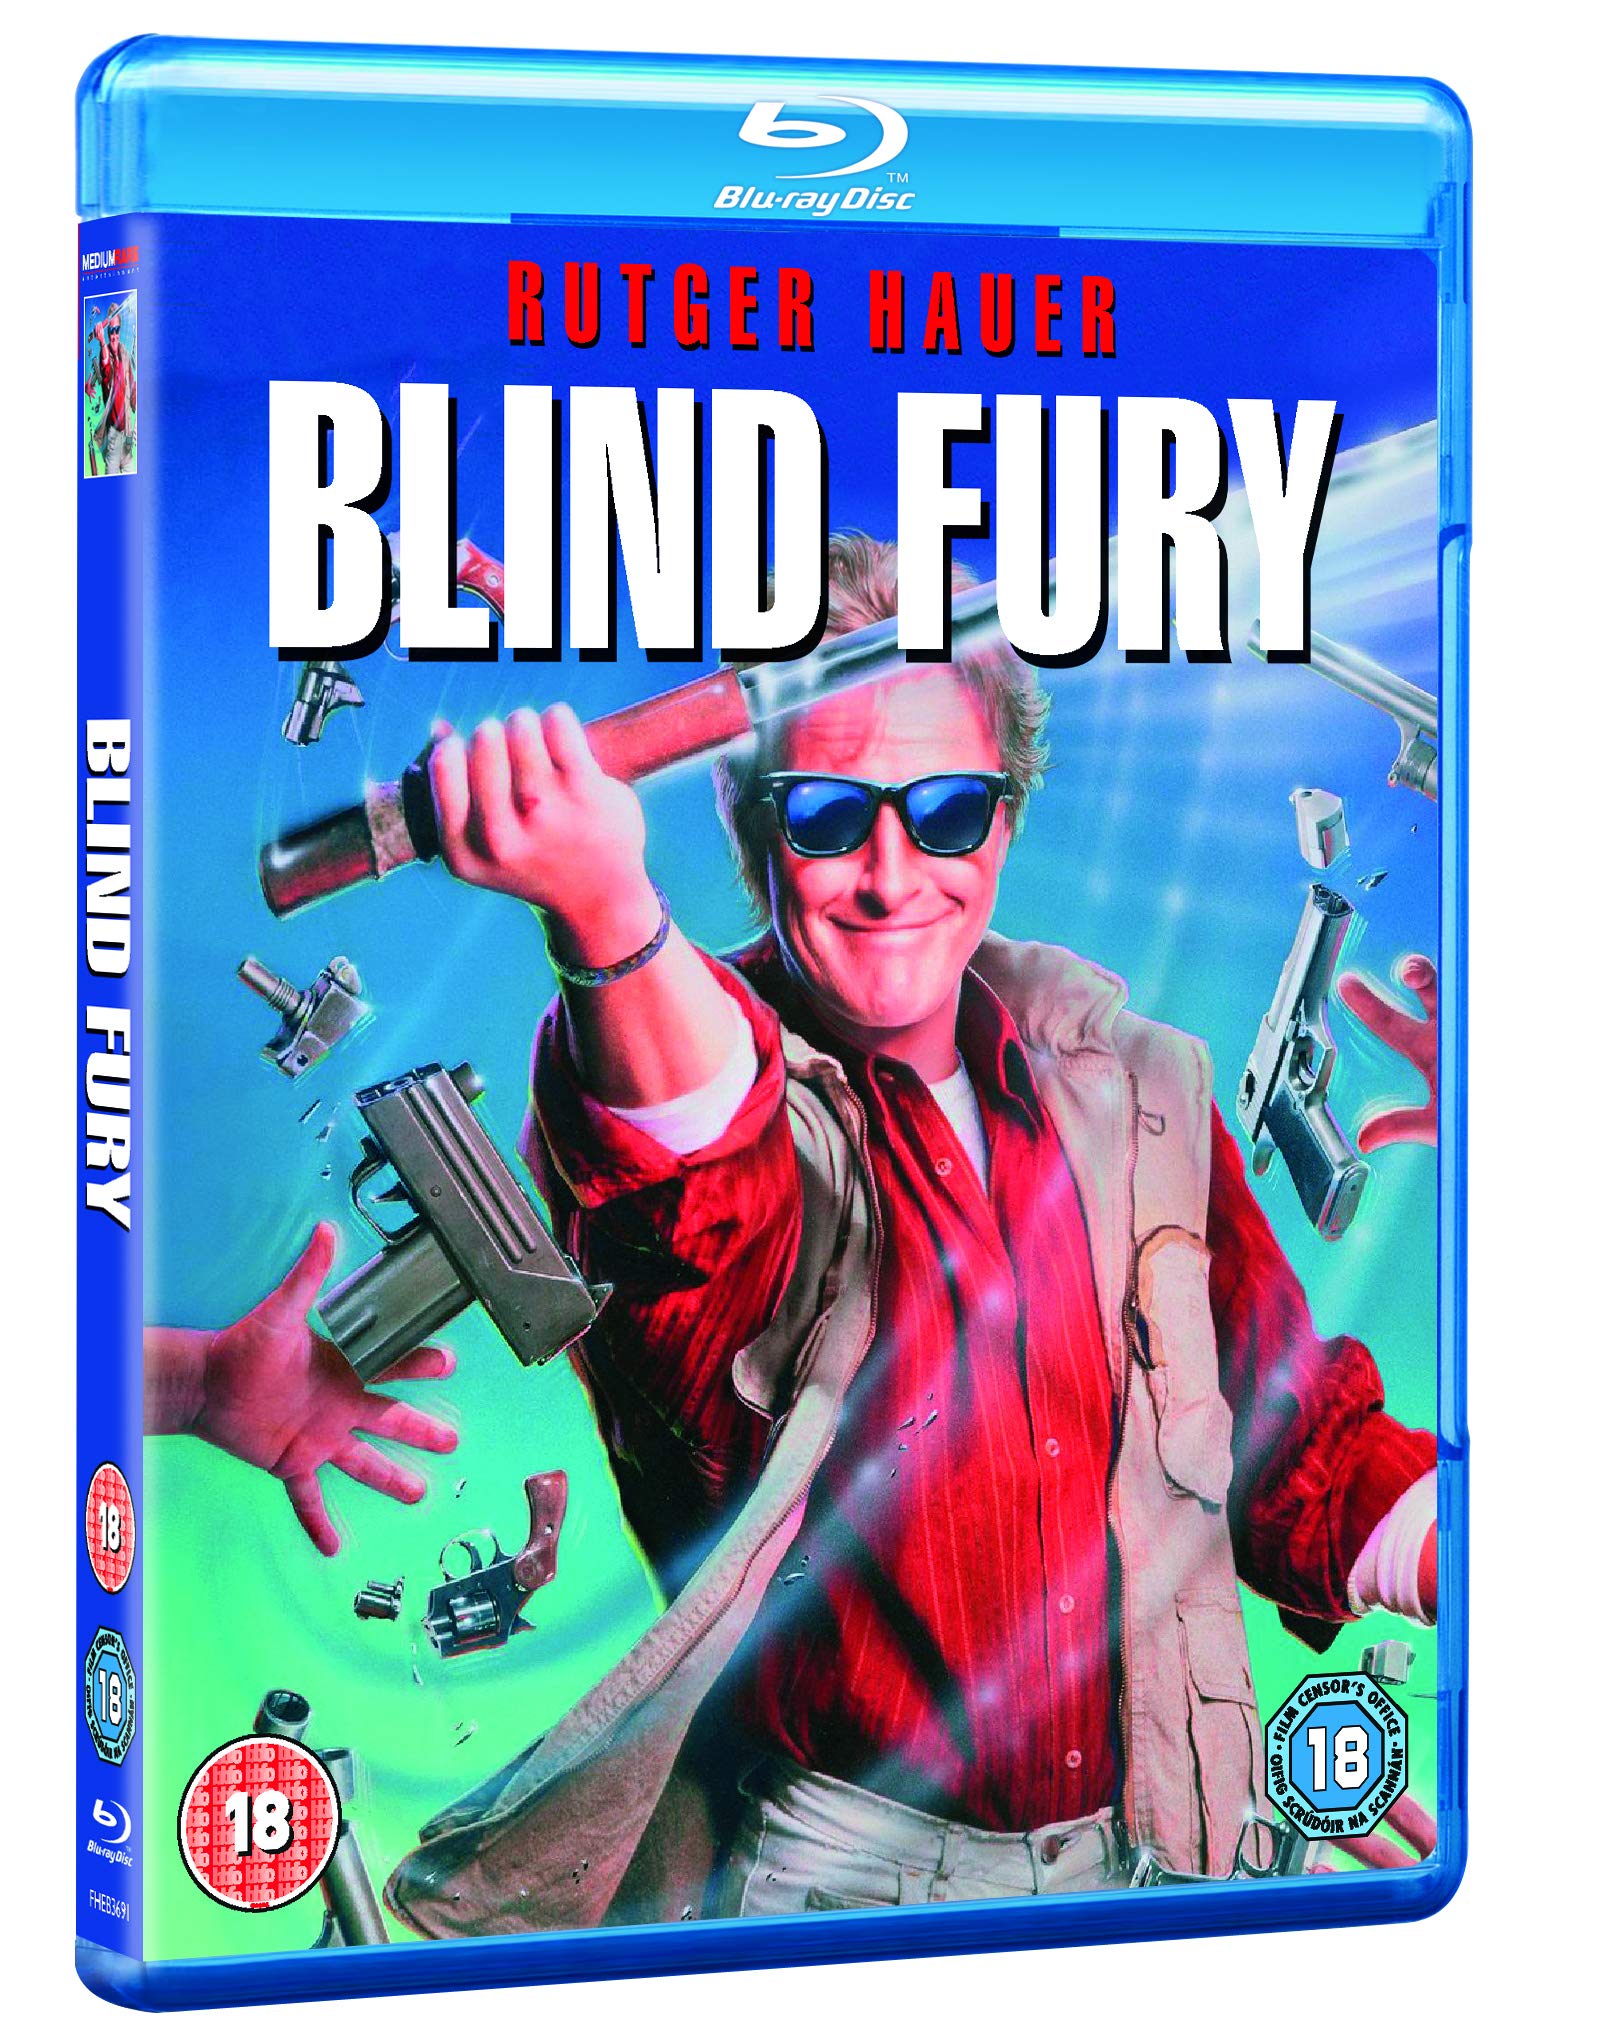 Blind Fury [Blu-ray]